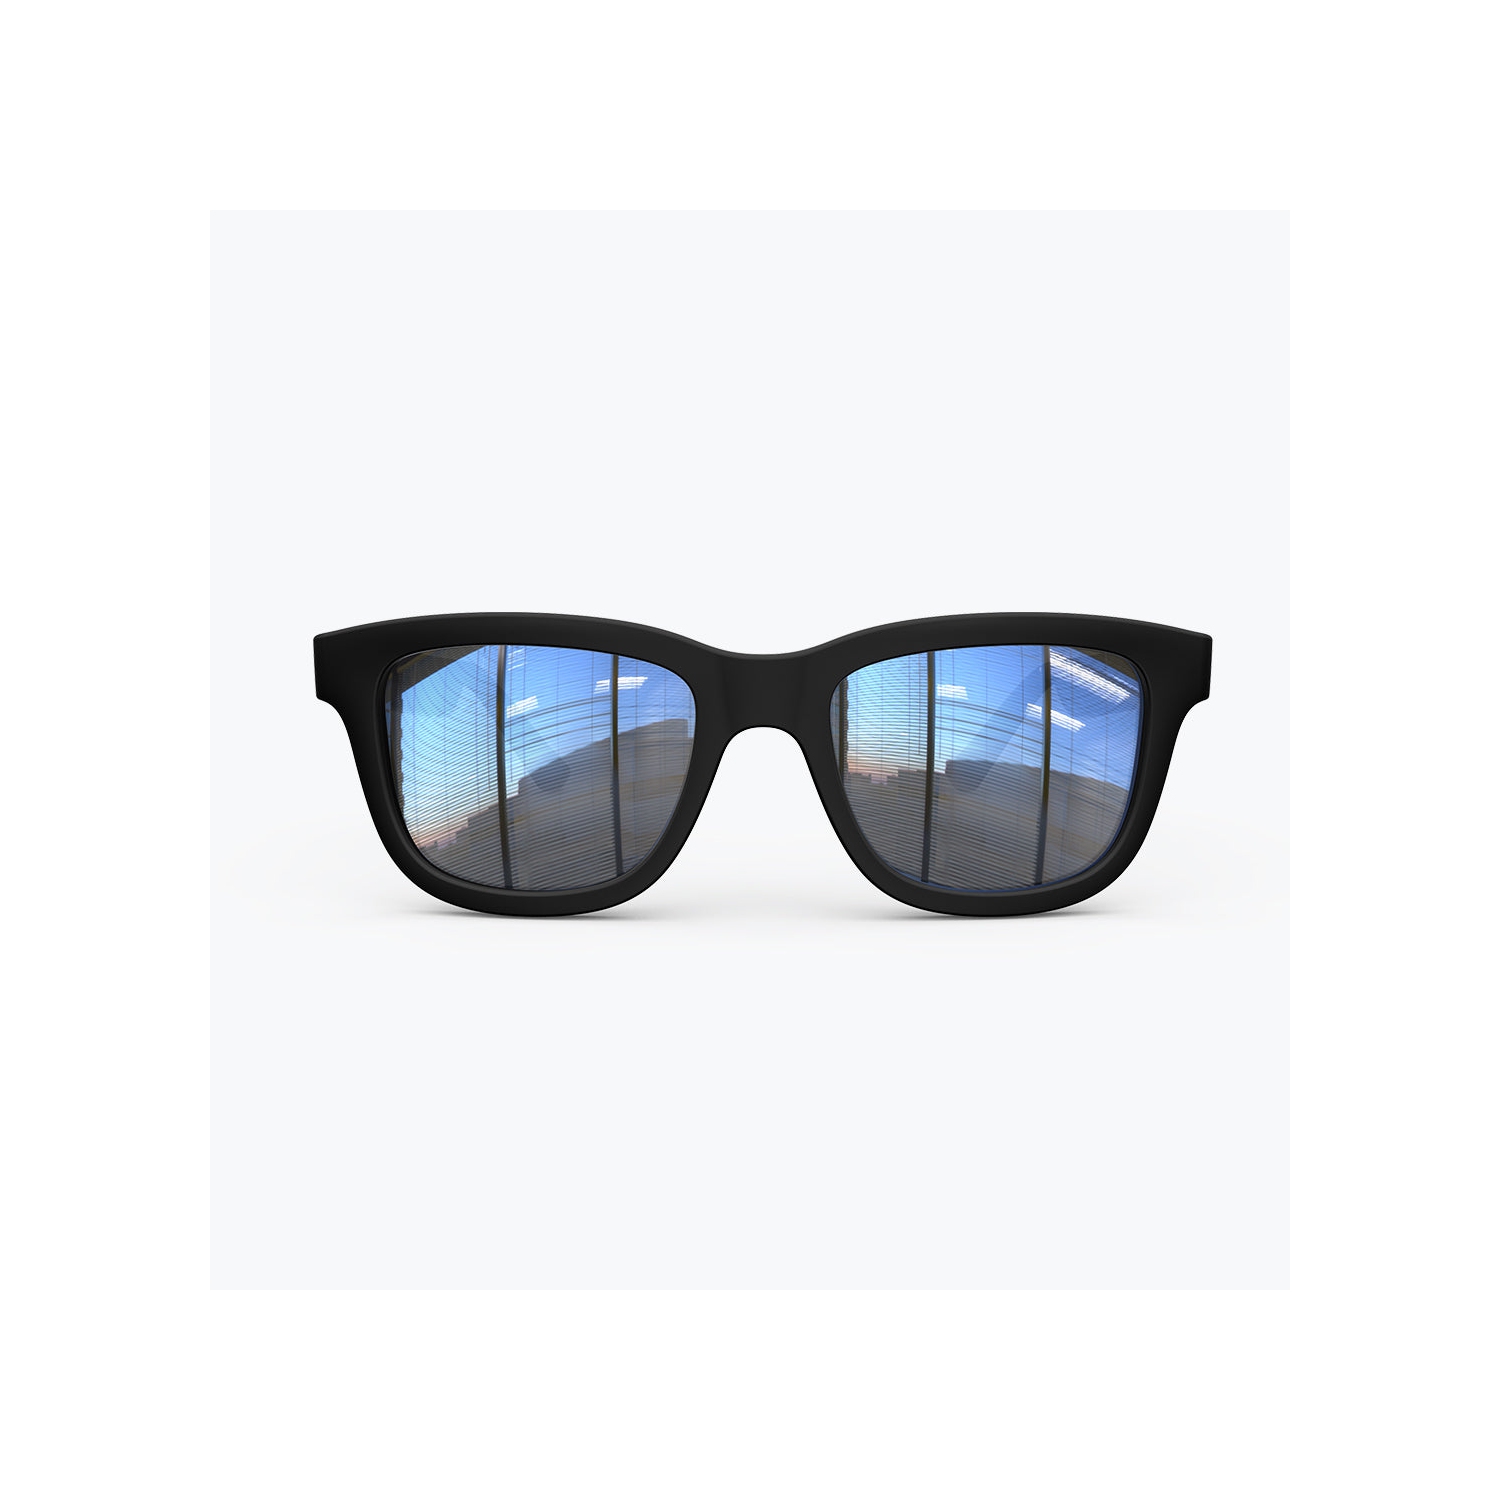 Ampere: Dusk Sports Sunglasses | App Enabled Smart Sunglasses | Adjustable Lenses, Smart Audio, Voice-assistant, Fast-Charging